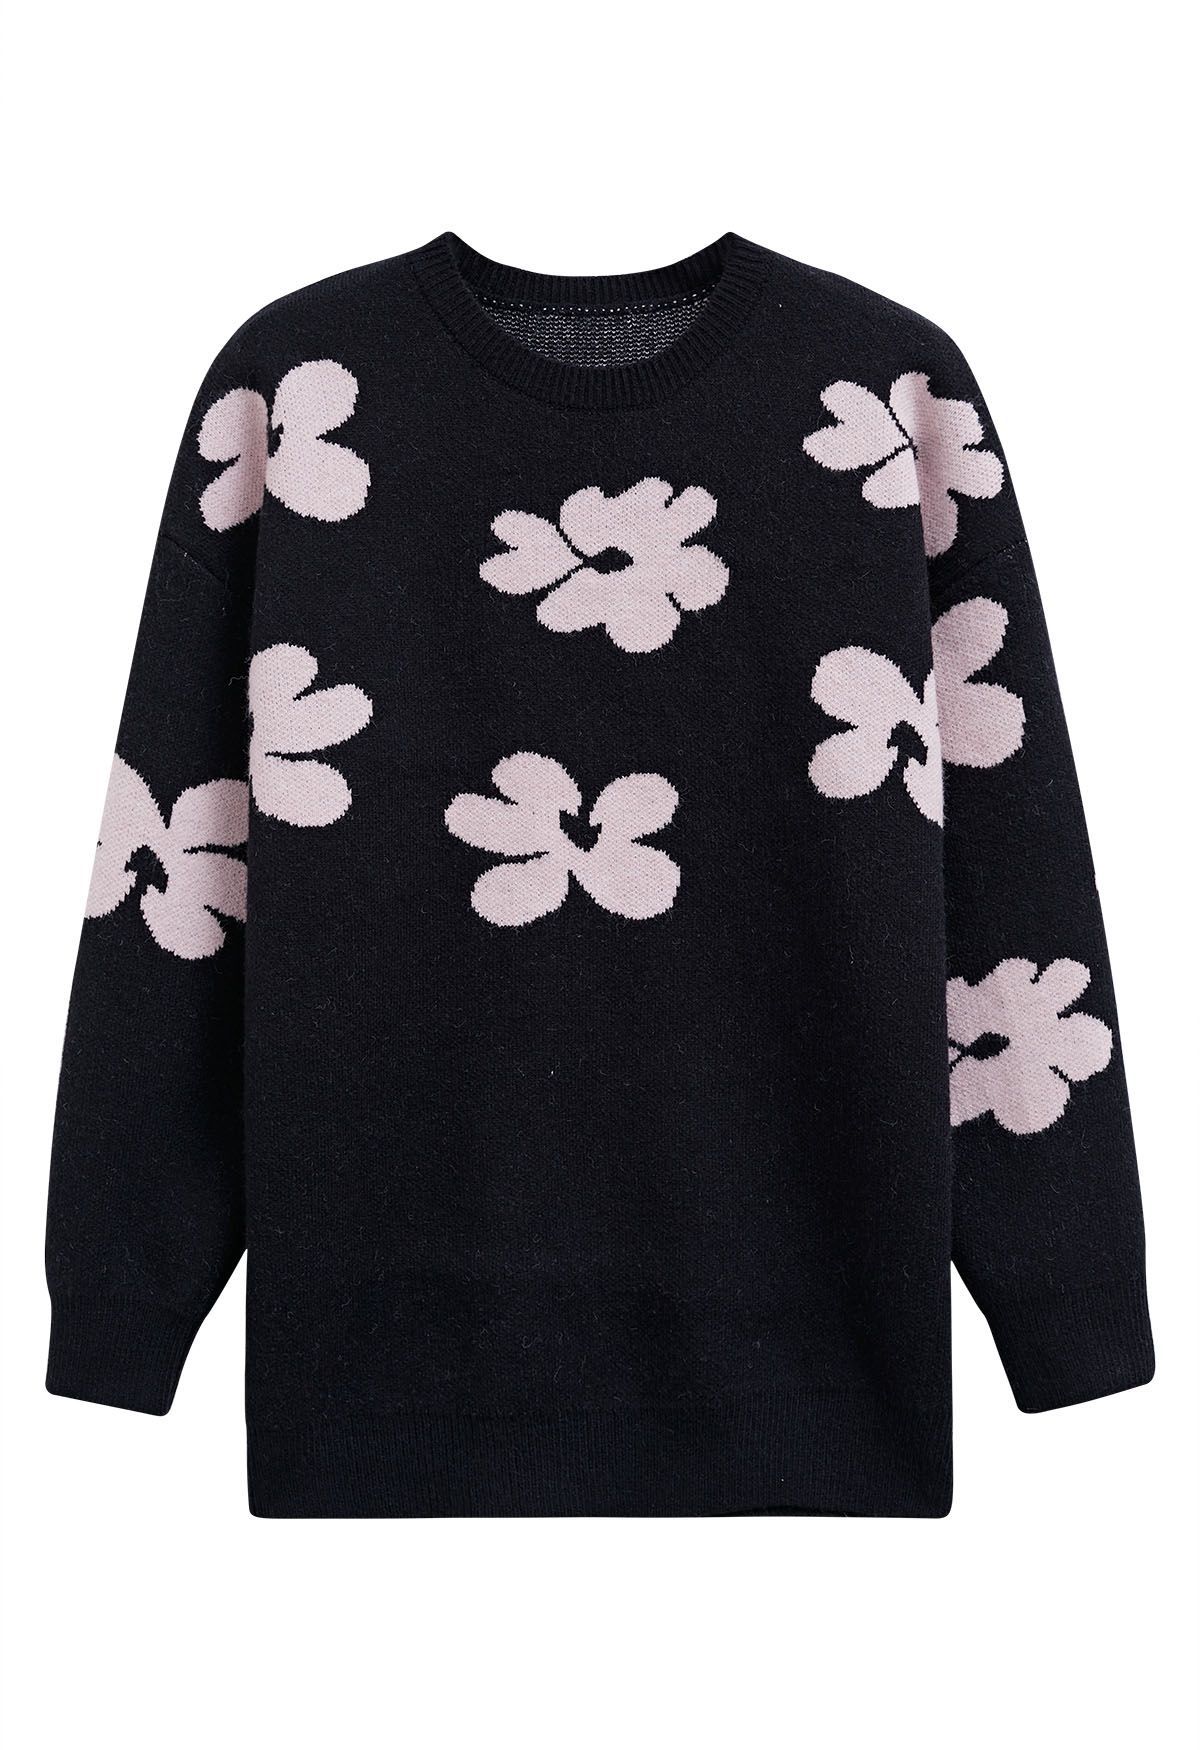 Contrast Flower Pattern Knit Sweater in Black | Chicwish